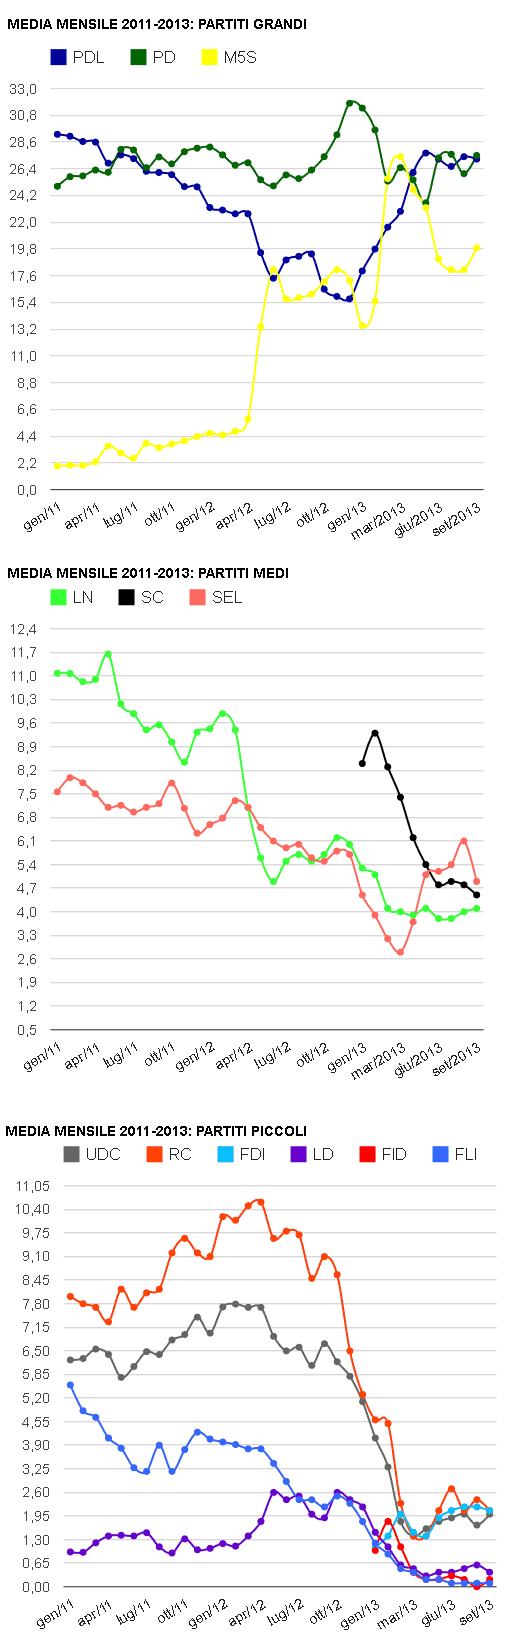 media mensile sondaggi partiti (gen/2011 - set/2013)i